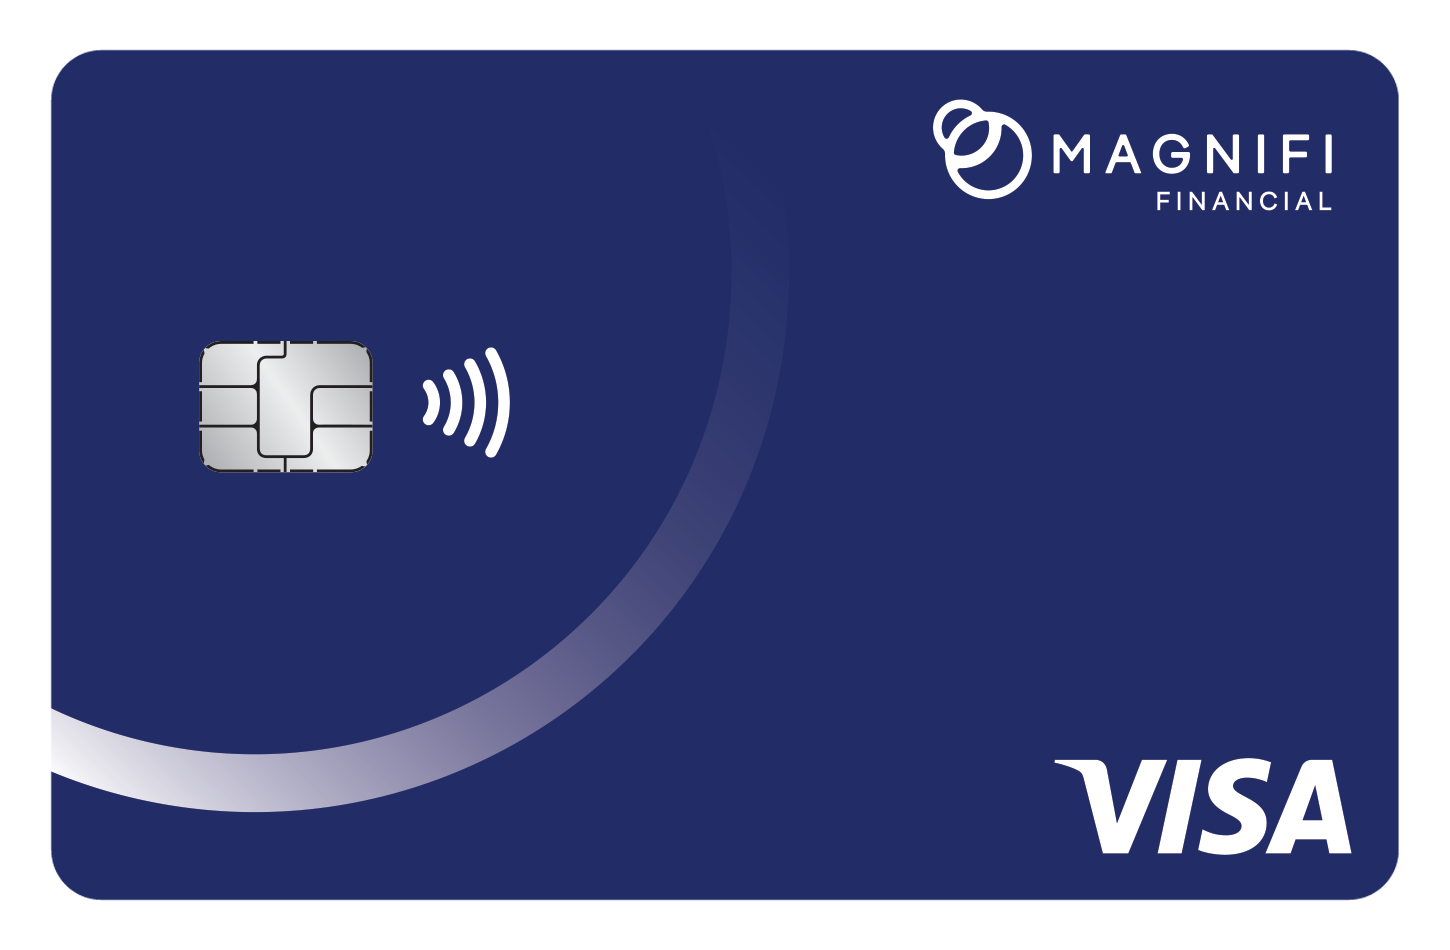 Magnifi Financial Visa Card